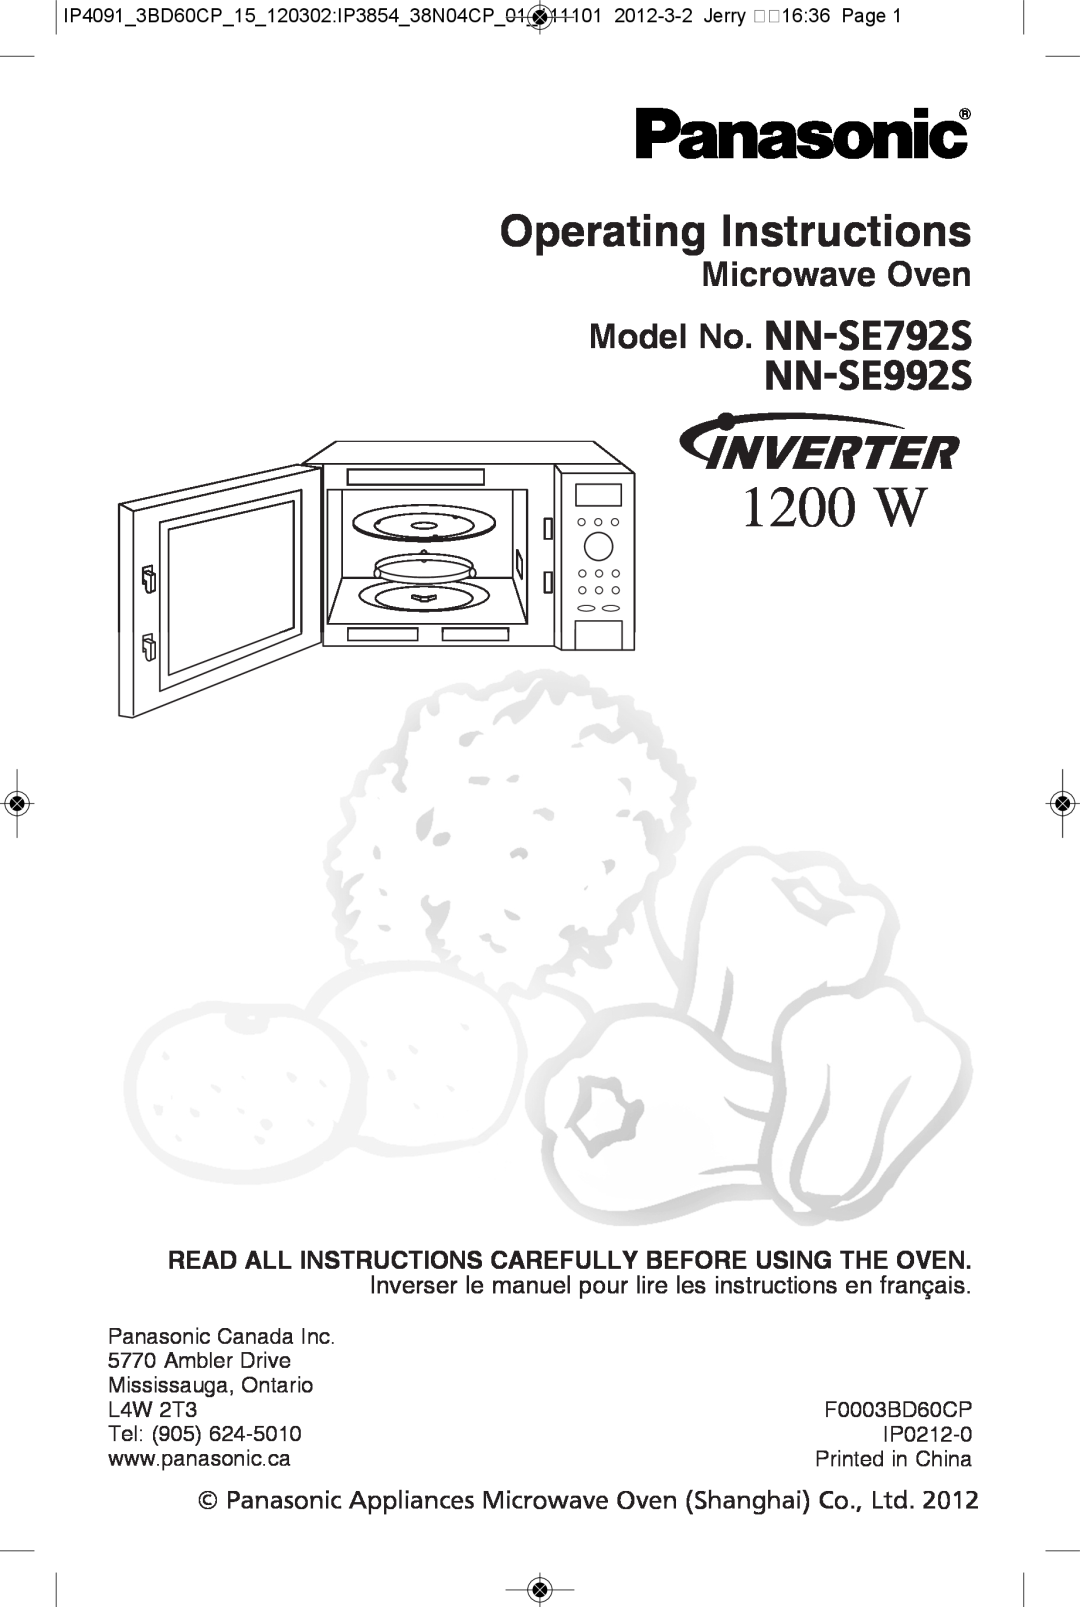 Panasonic NN-SE992S manual operating instructions, Microwave oven Model no. NN-SE792S, 1200 W 